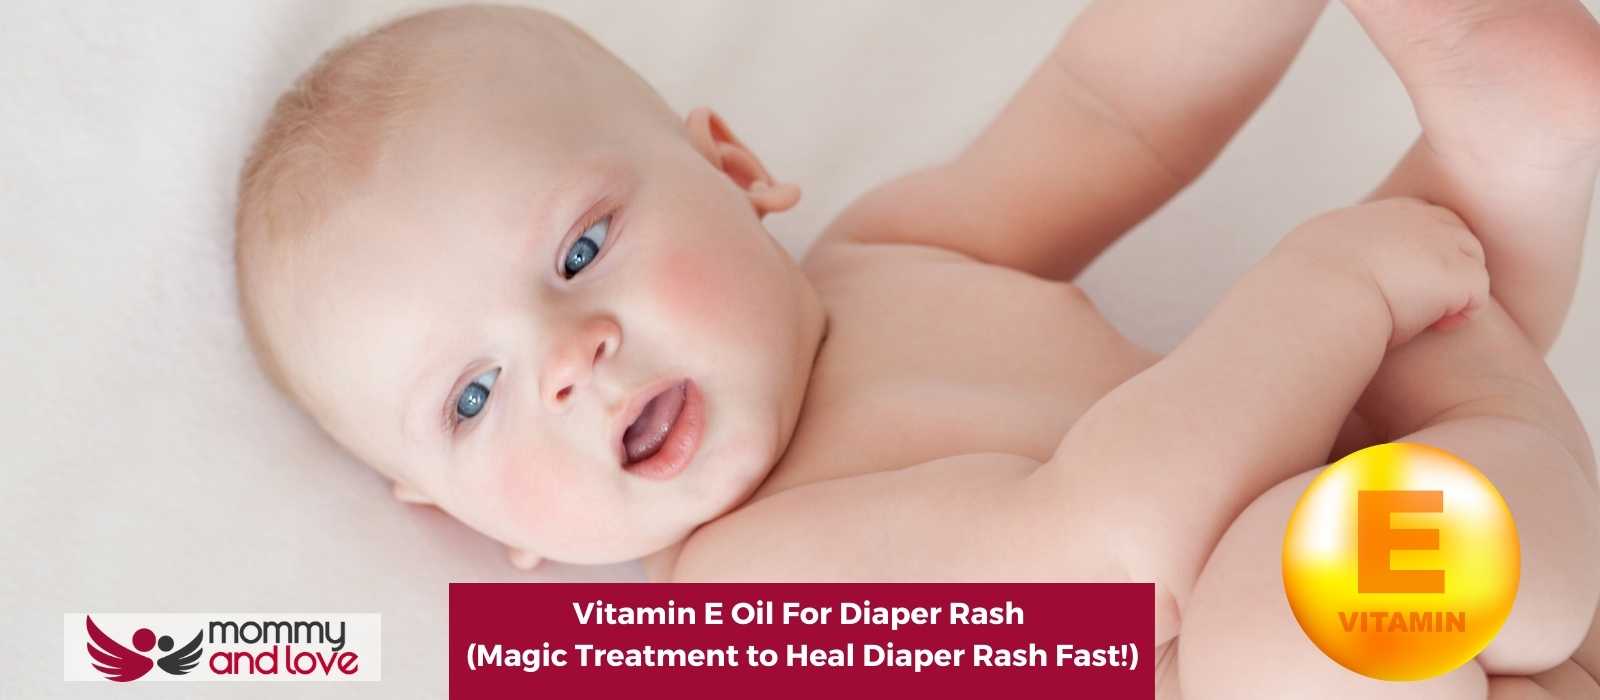 Vitamin E Oil For Diaper Rash (Magic Treatment to Heal Diaper Rash Fast!)